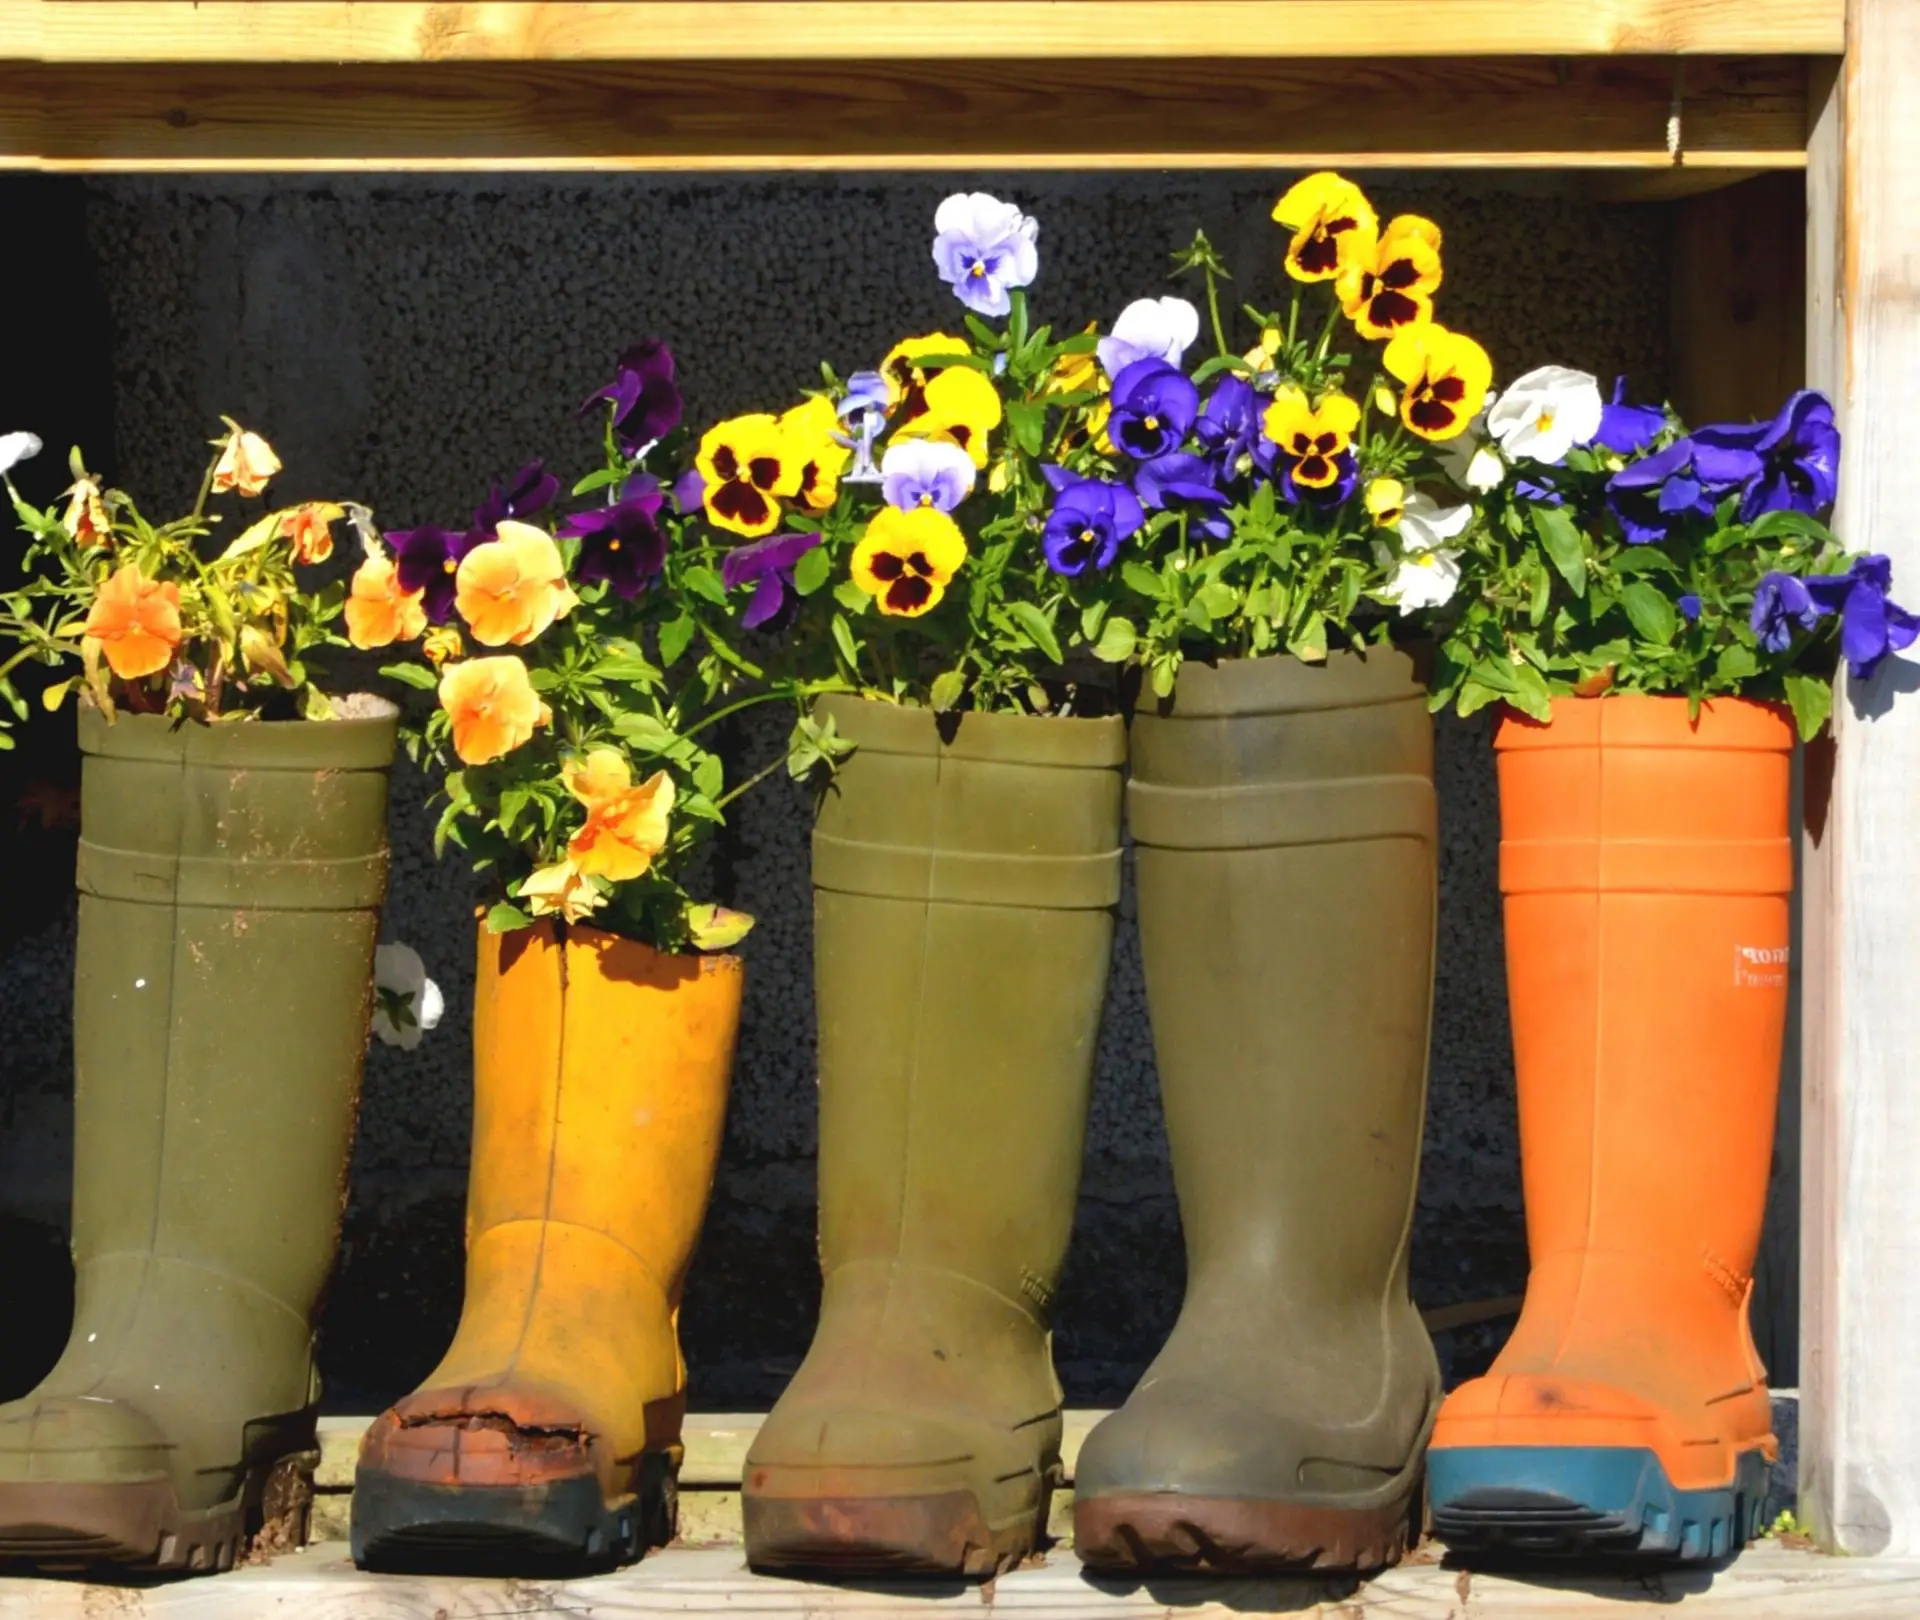 Rain boots as flower pots